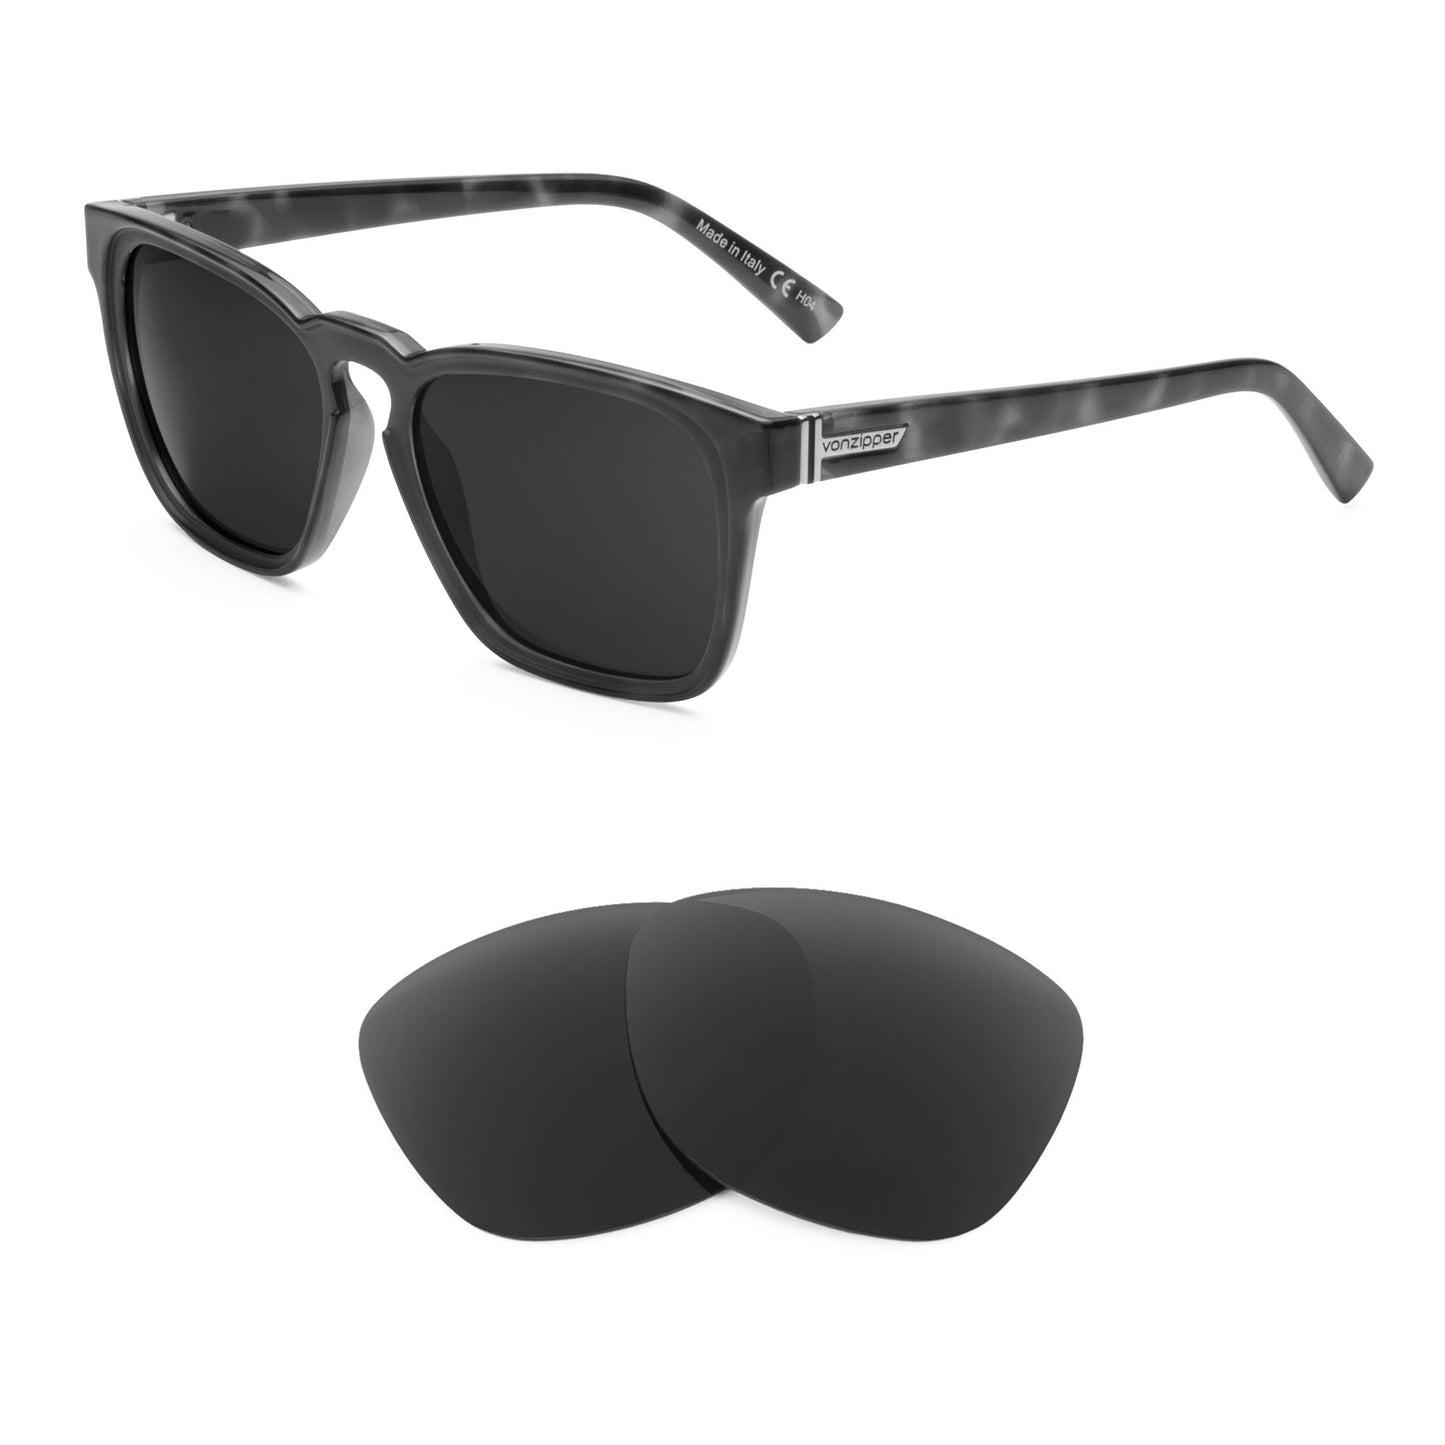 VonZipper Levee sunglasses with replacement lenses